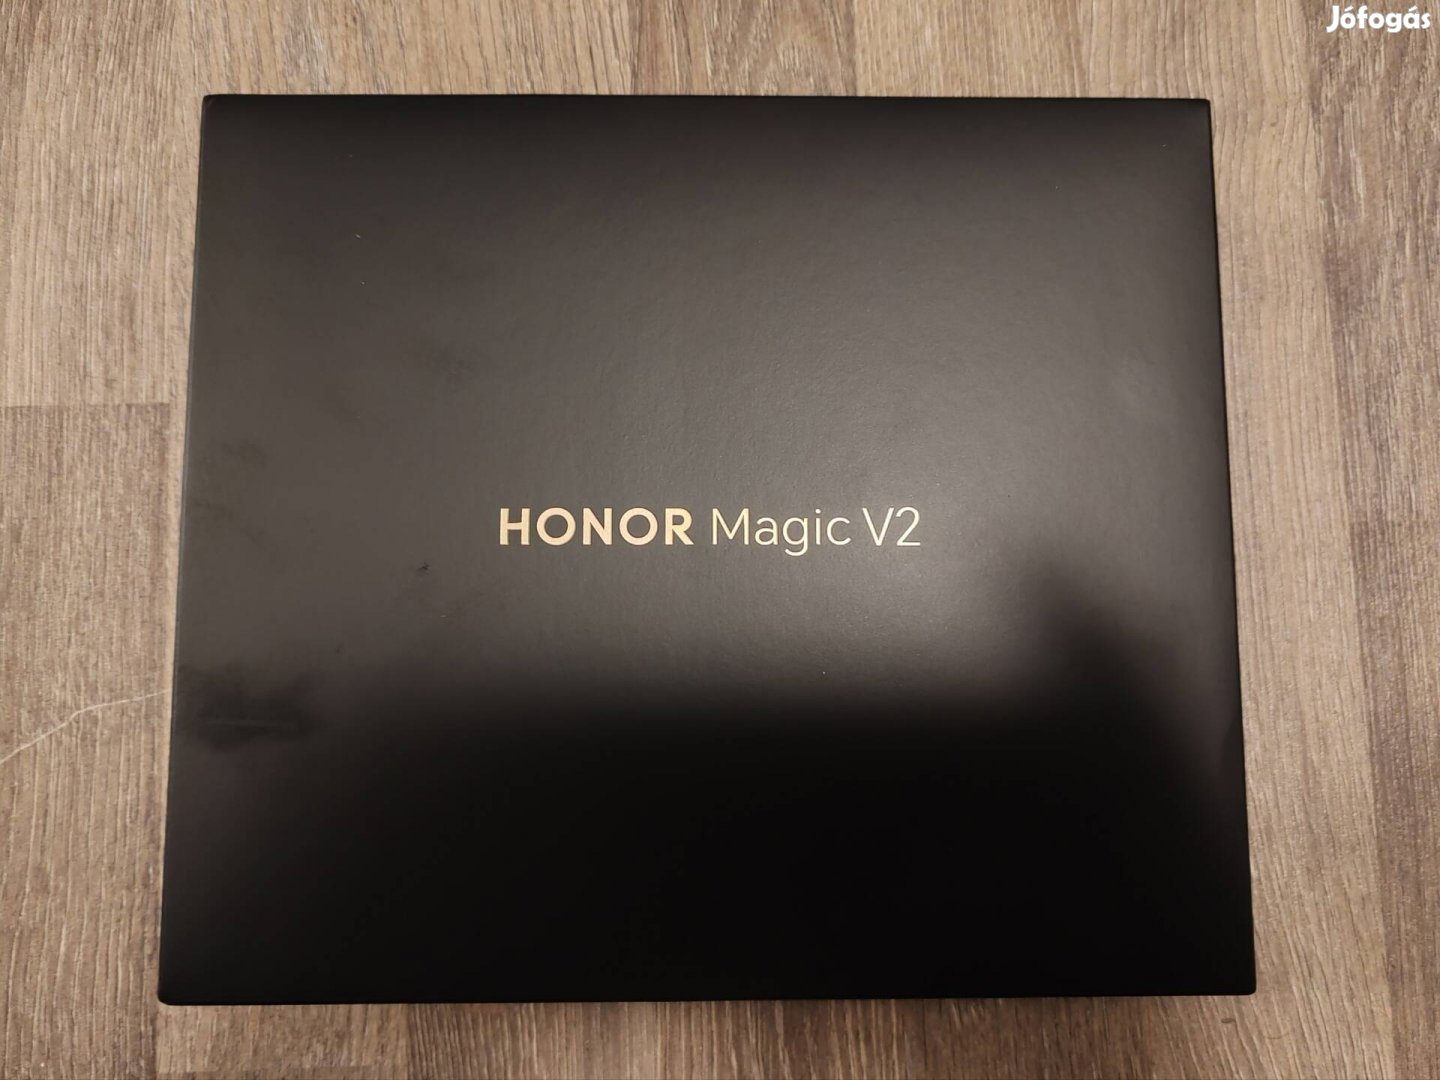 Honor magic V2